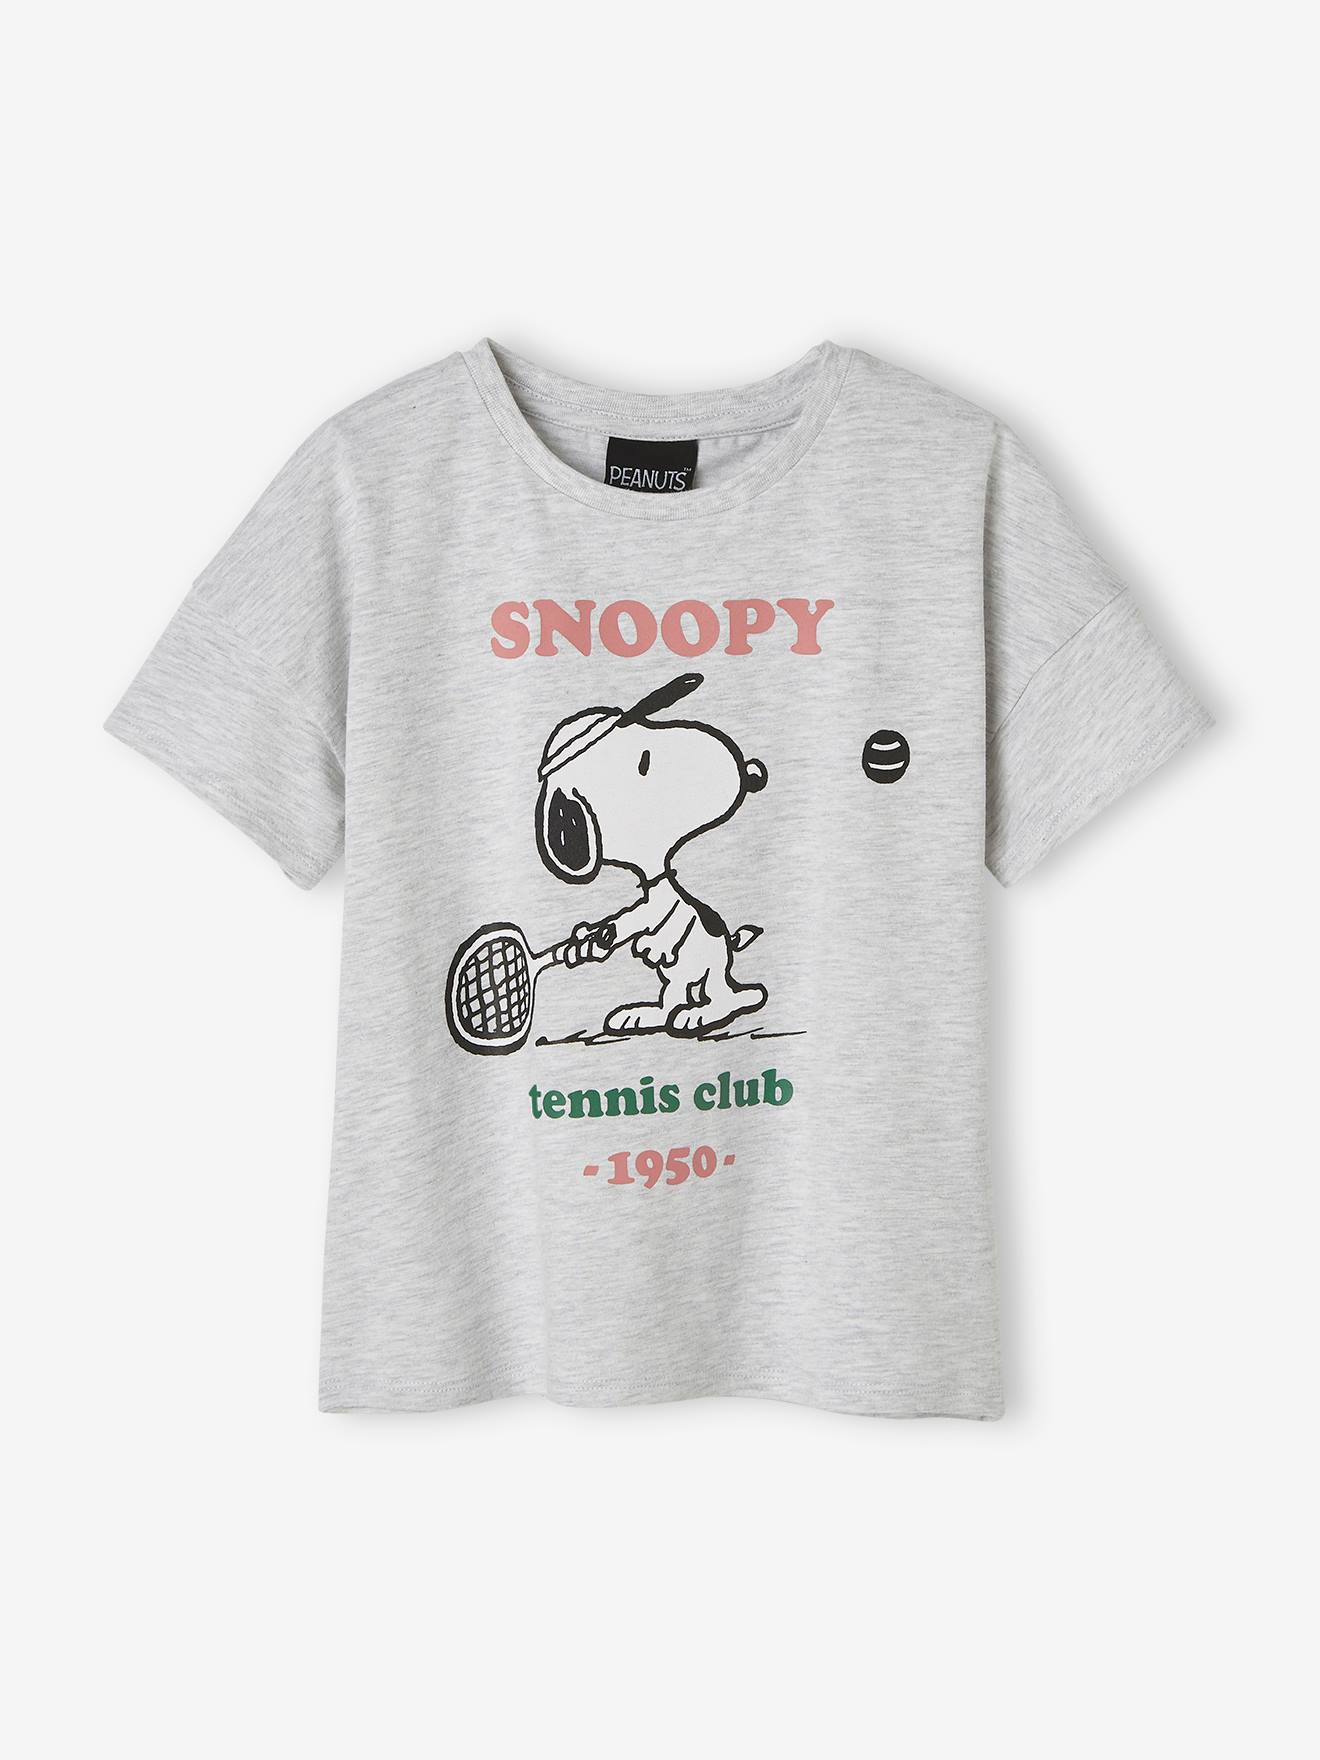 Short Sleeve Snoopy T-Shirt, by Peanuts(r) marl grey